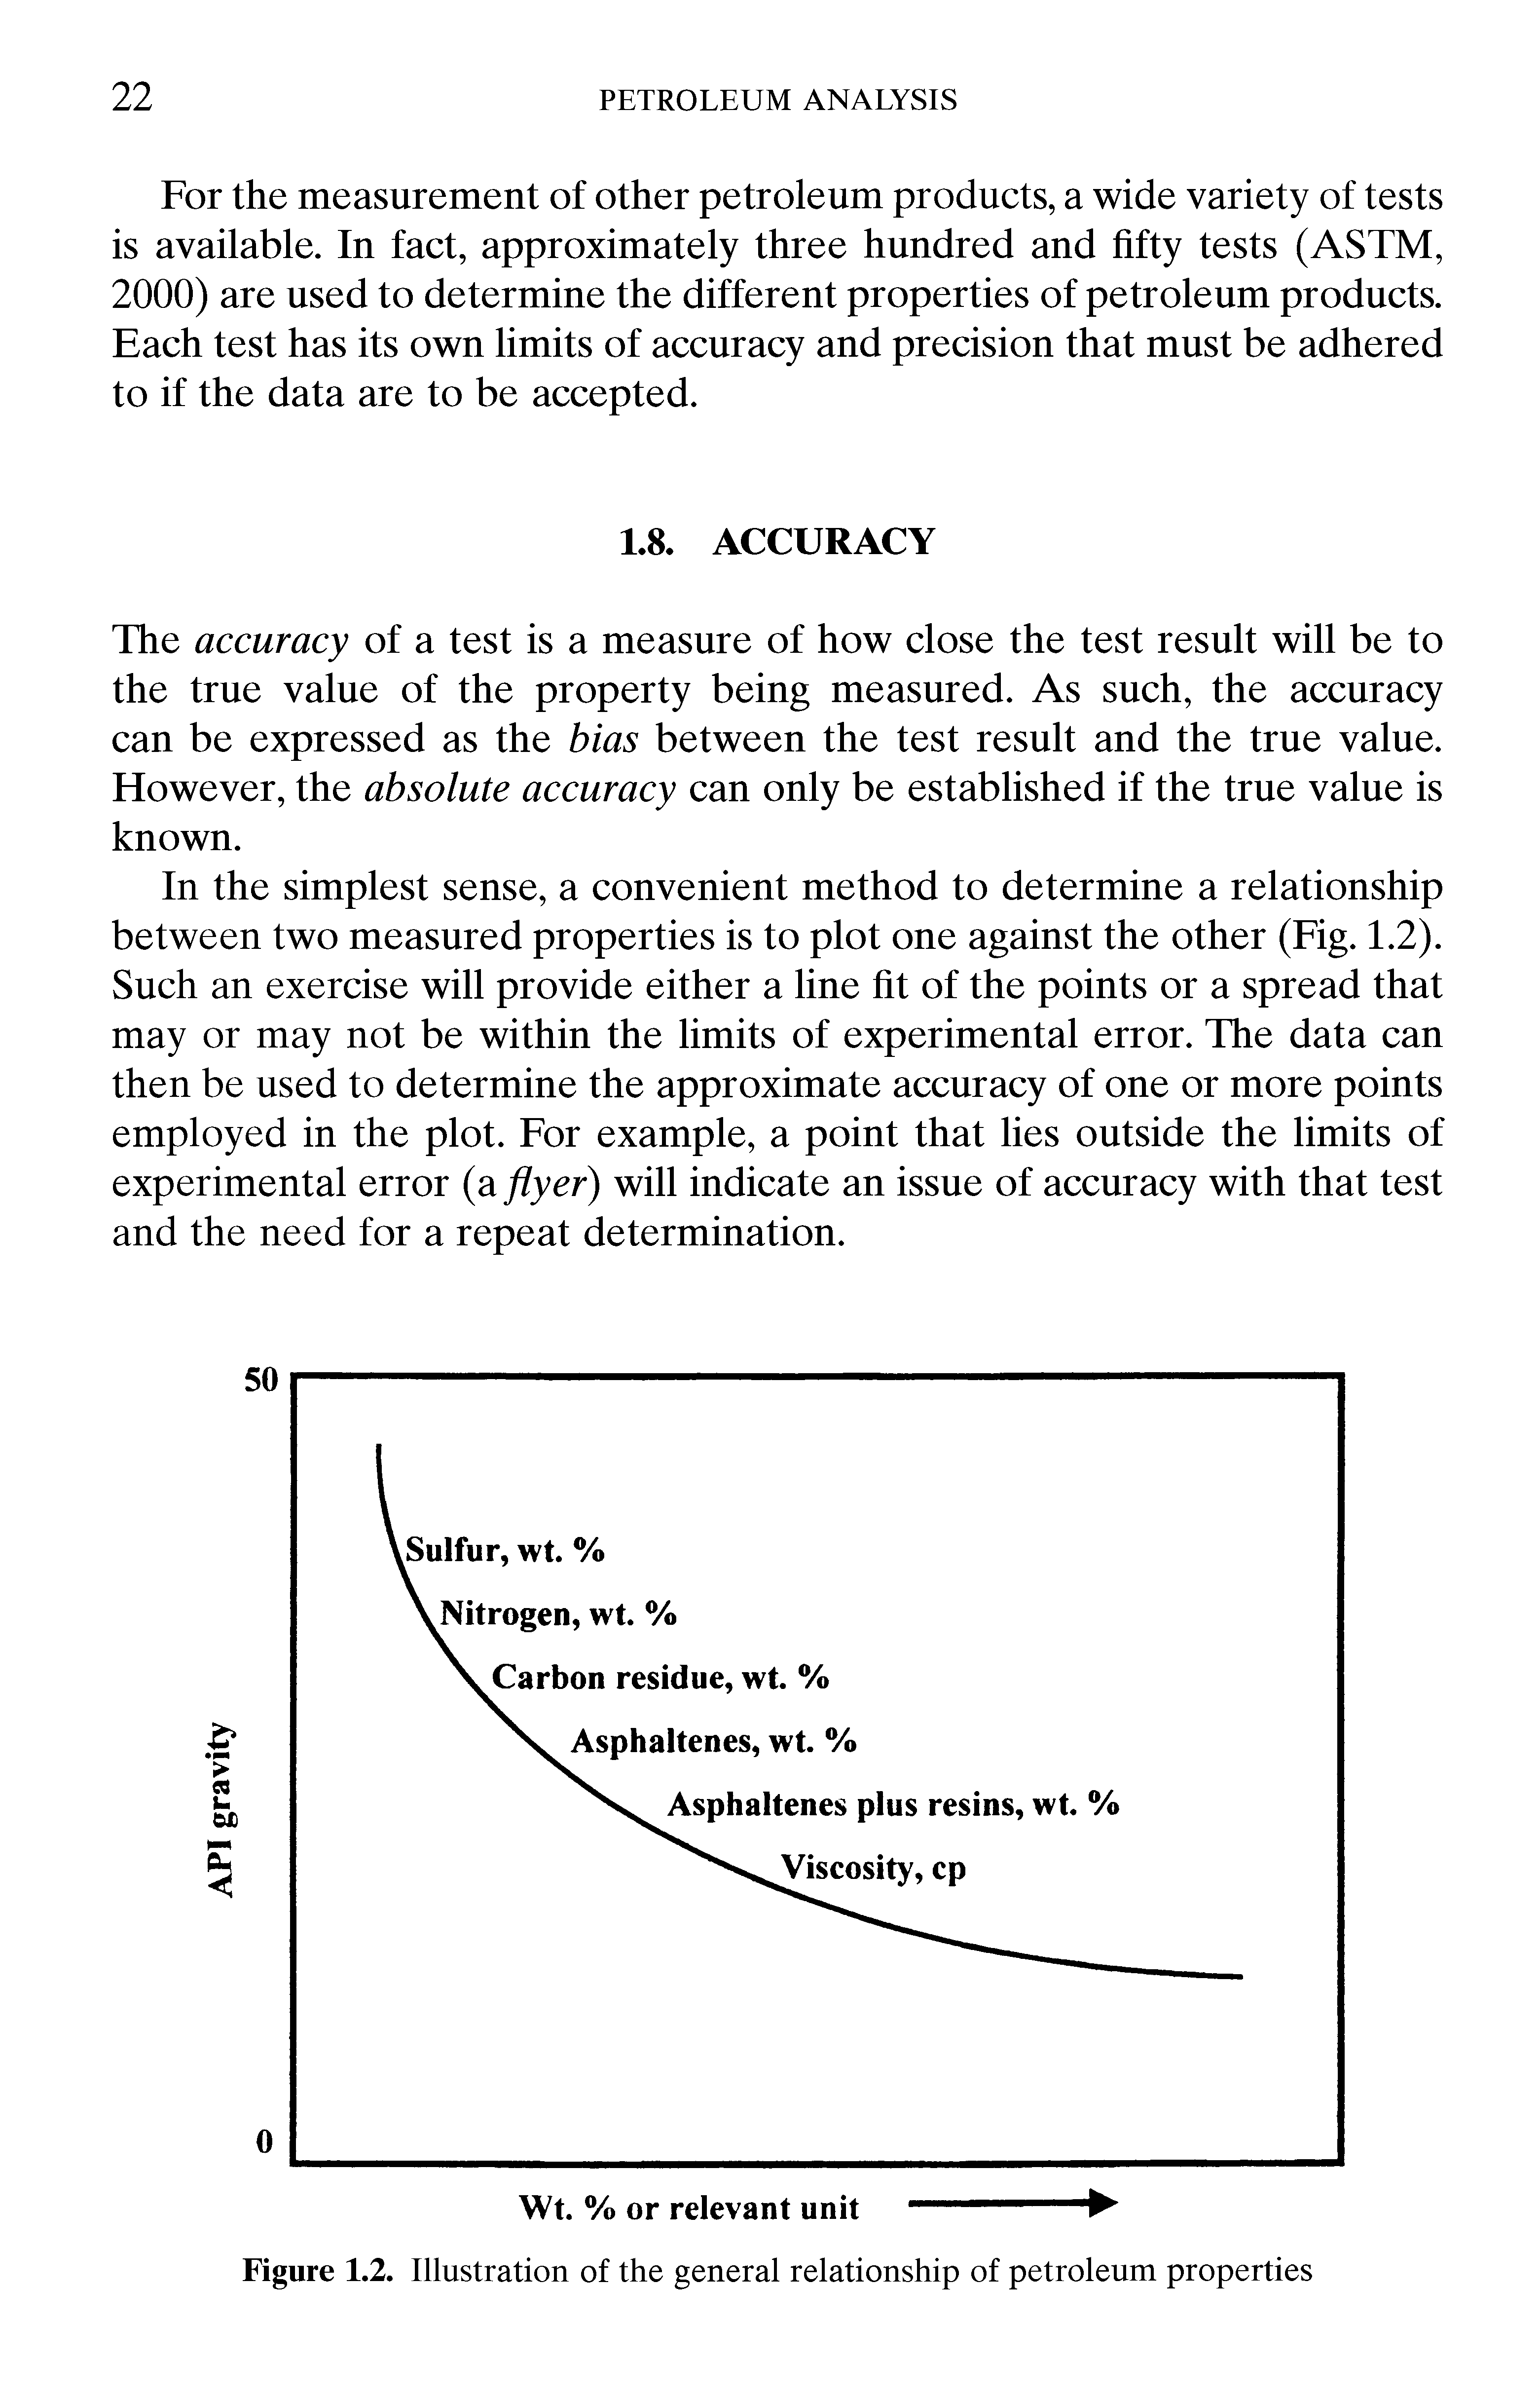 Figure 1,2. Illustration of the general relationship of petroleum properties...